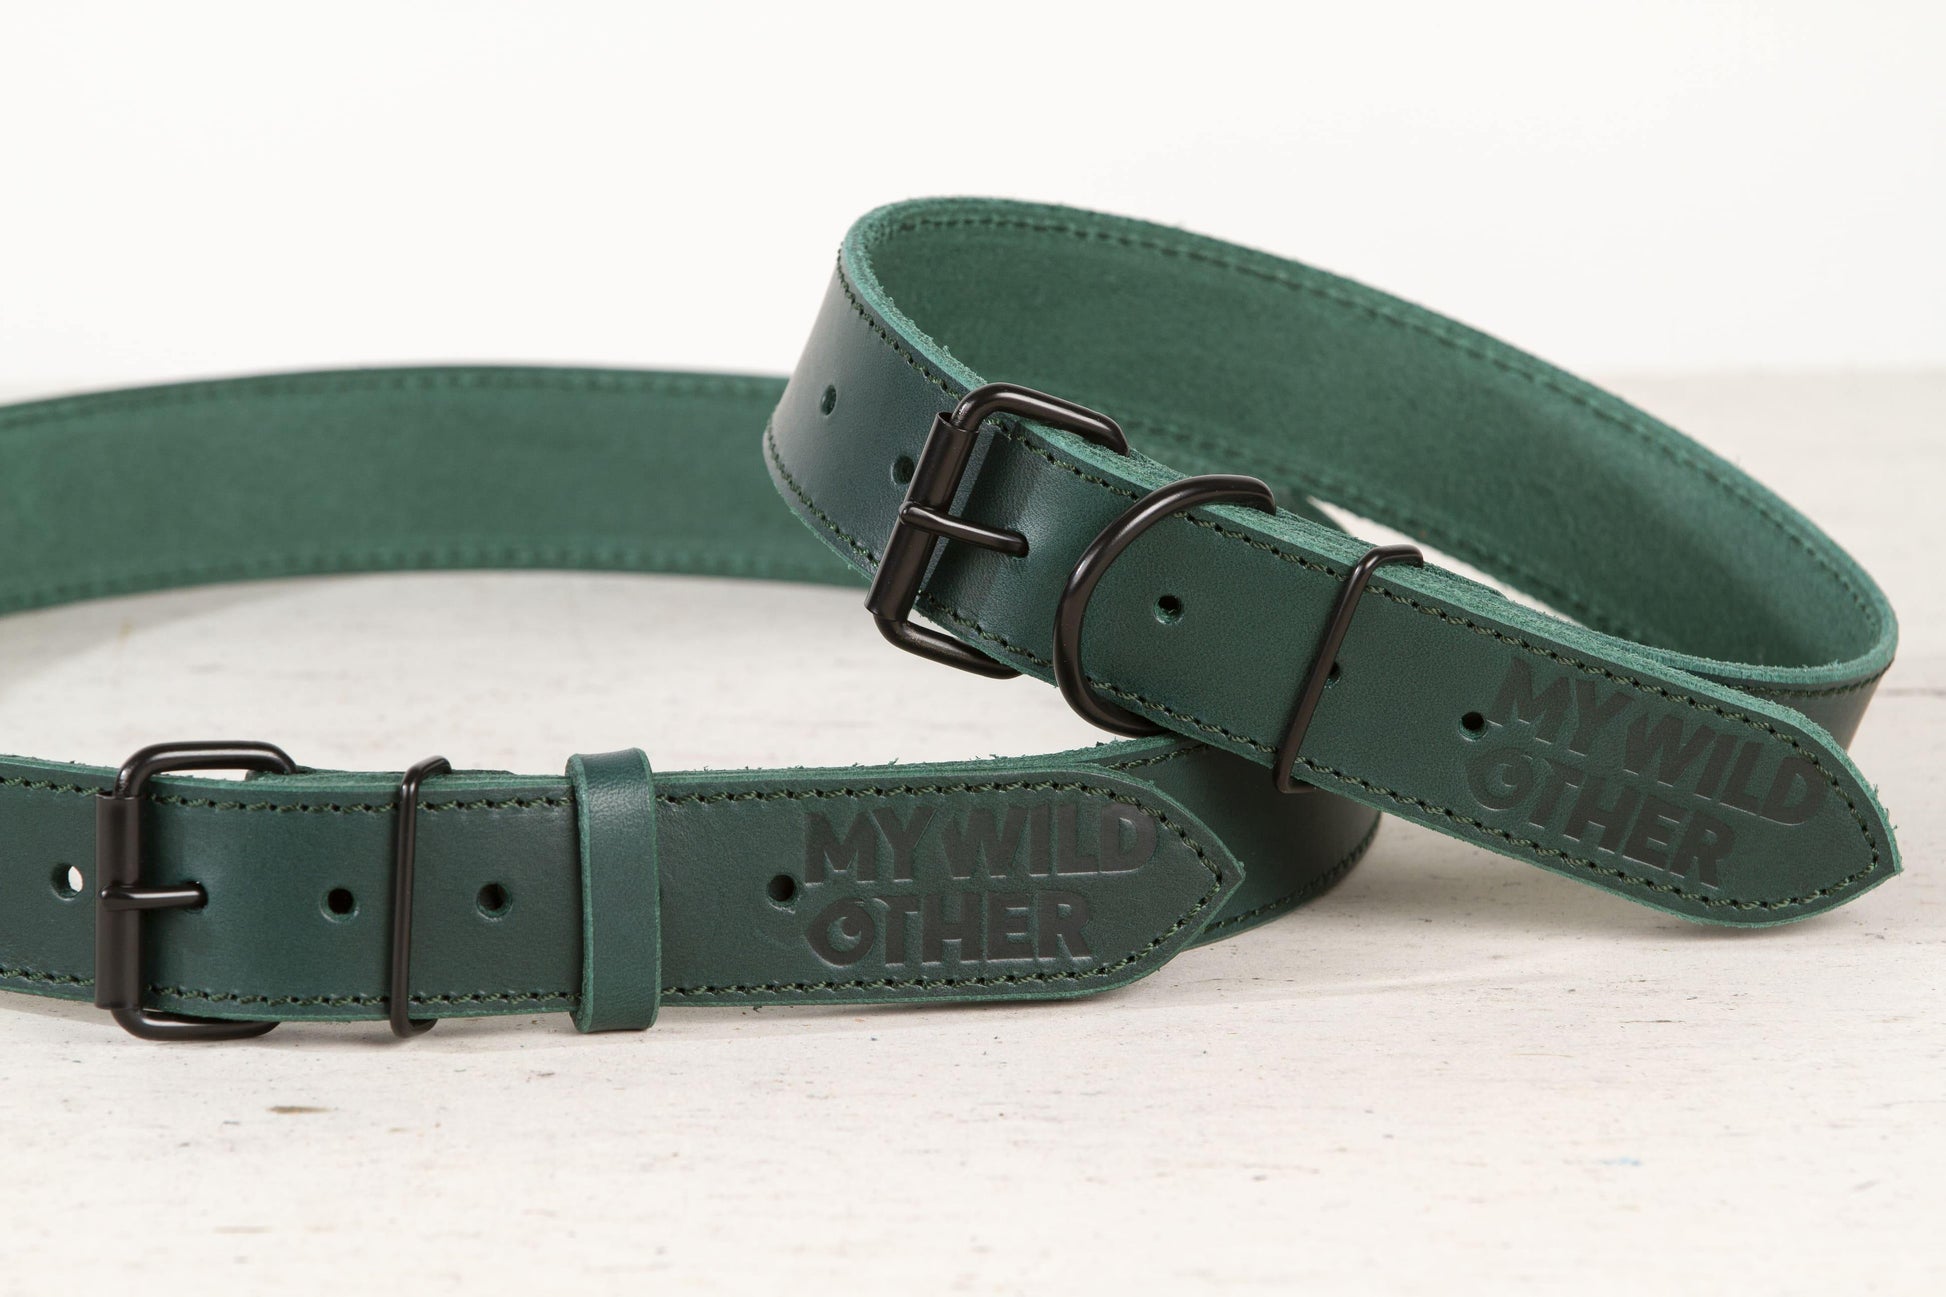 Handmade green leather dog collar - premium dog goods handmade in Europe by My Wild Other